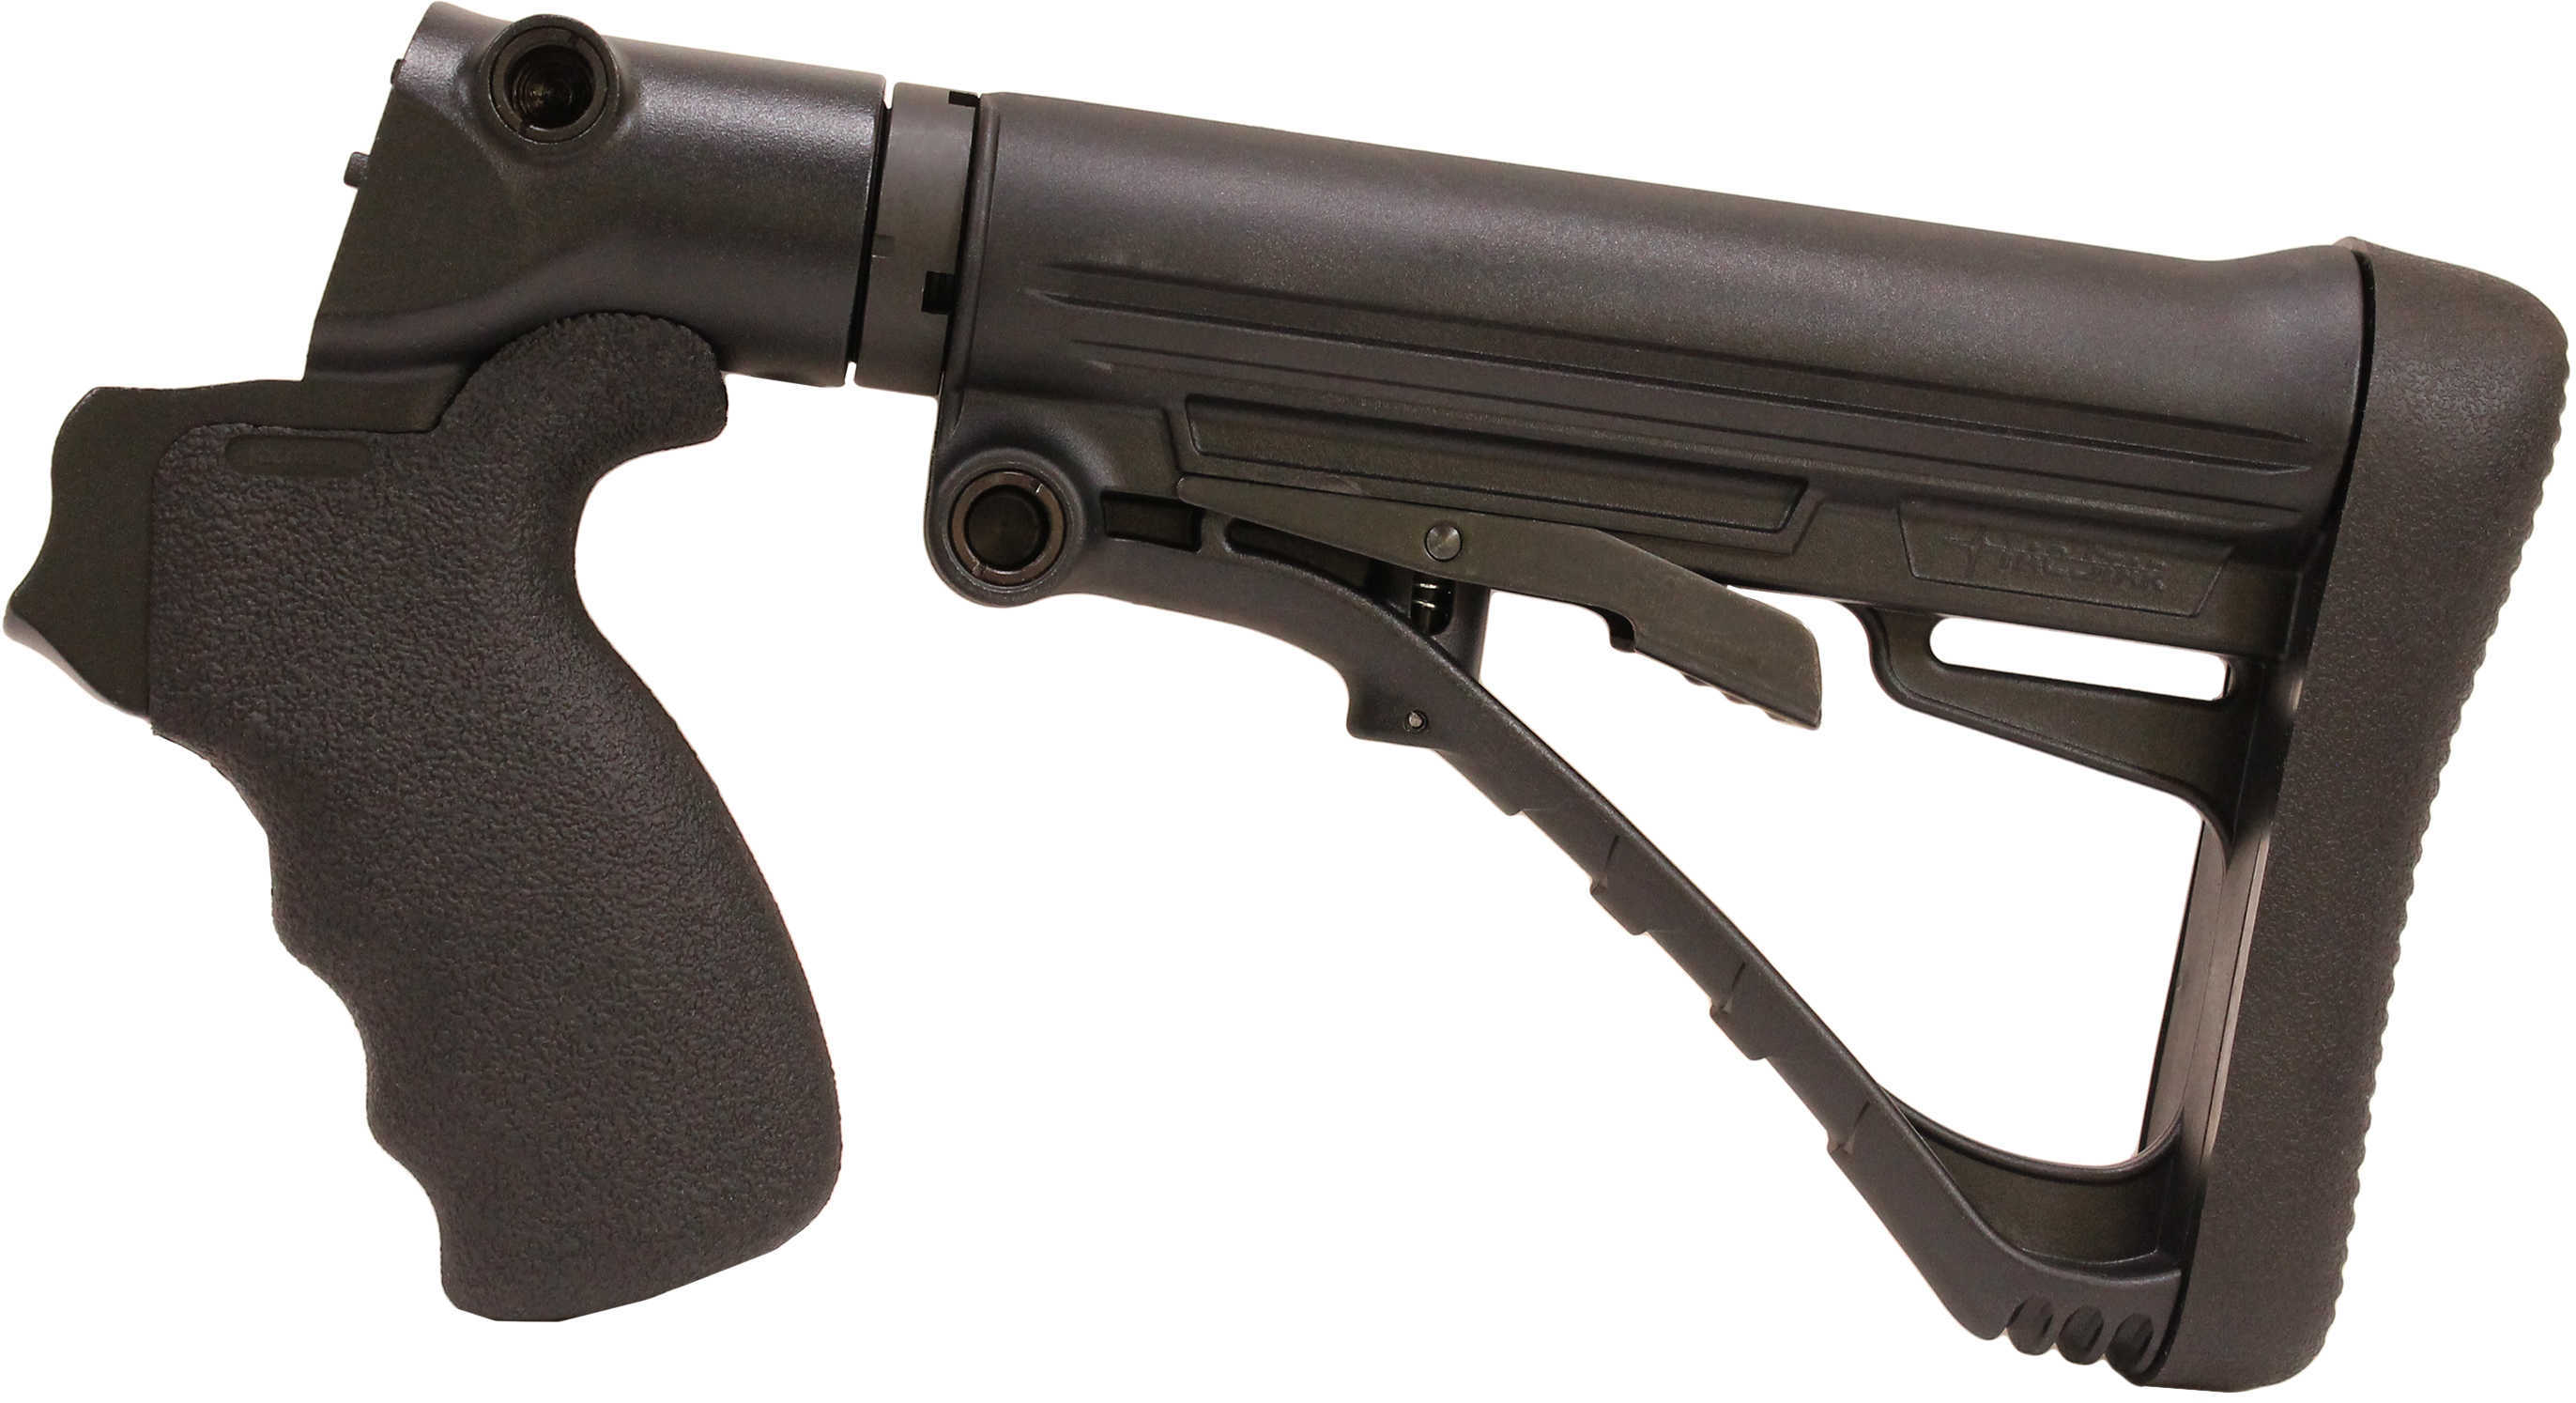 TacStar 1081220 Shotgun Collapsible Stock Kit Mossberg 500 Polymer Black